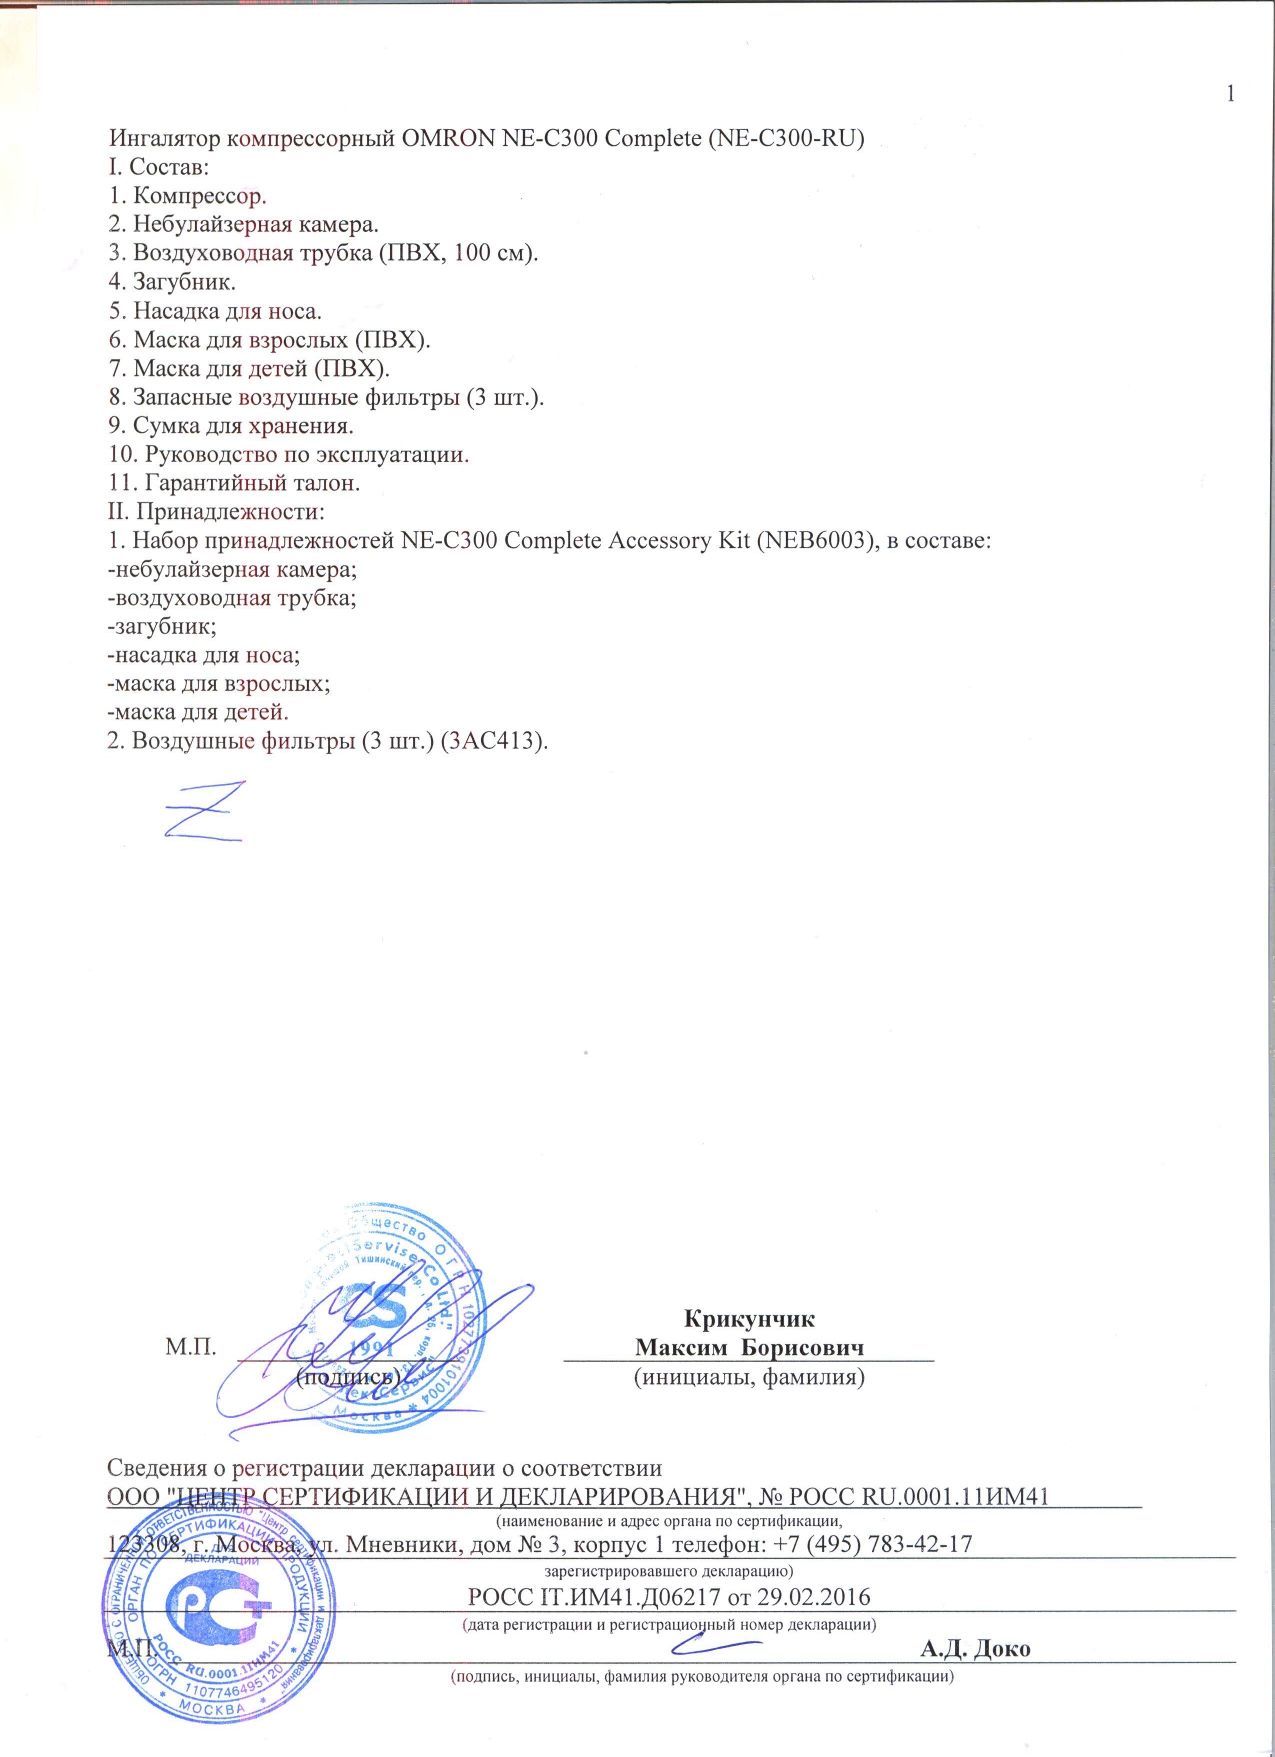 Ингалятор Omron NE - C300 - RU сертификат